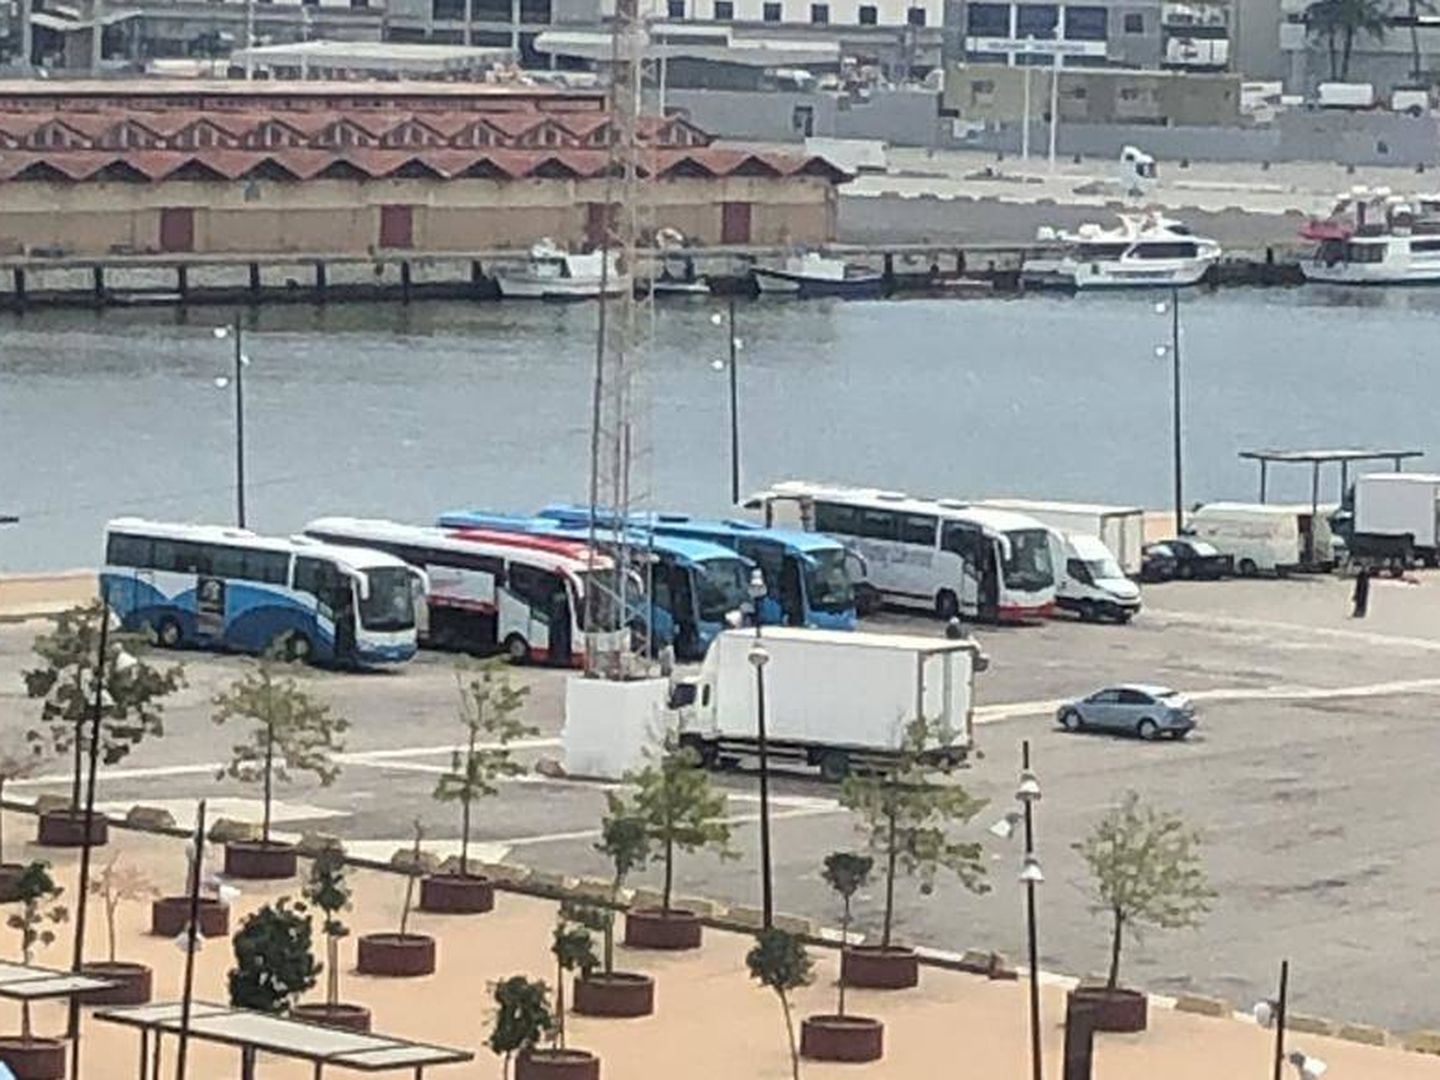 Autobuses marroquíes, en el puerto de Algeciras.